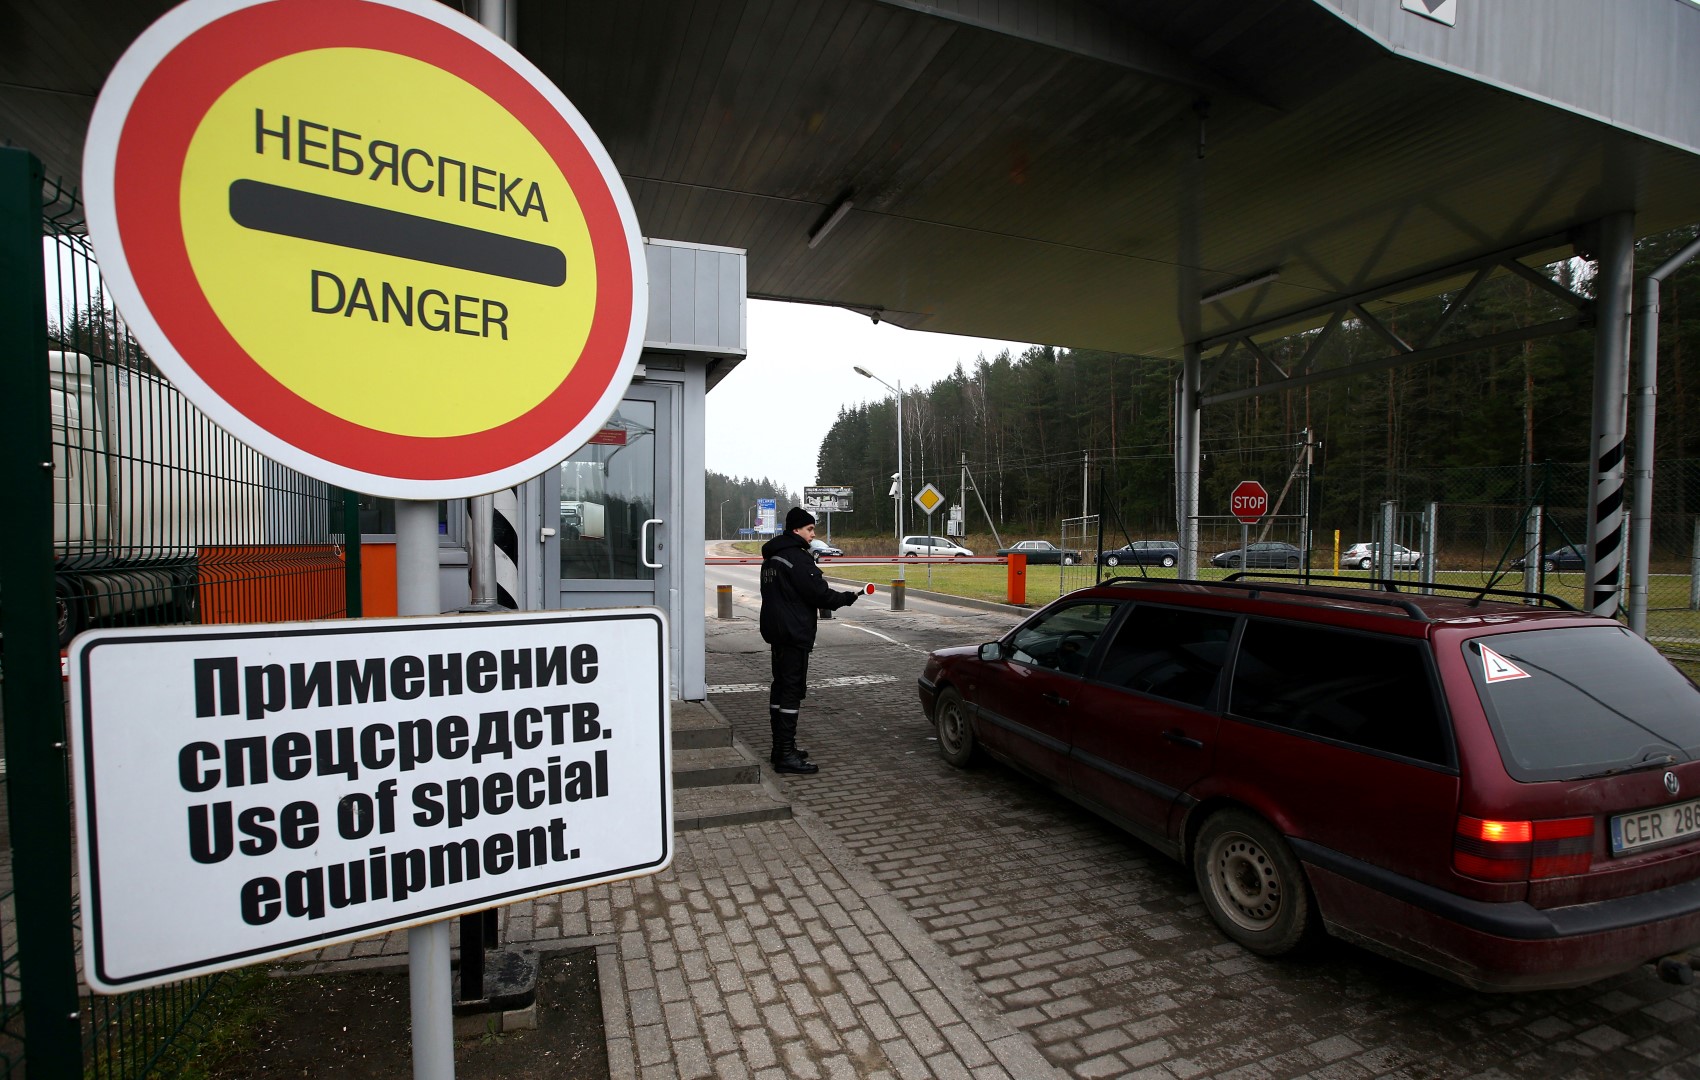 A Belarussian border guard stops a car at a checkpoint Kotlovka at the border between Belarus and Lithuania, near the village of Kotlovka, Belarus, November 22, 2016. Photo taken November 22, 2016. REUTERS/Vasily Fedosenko - S1AEUOLIVJAB